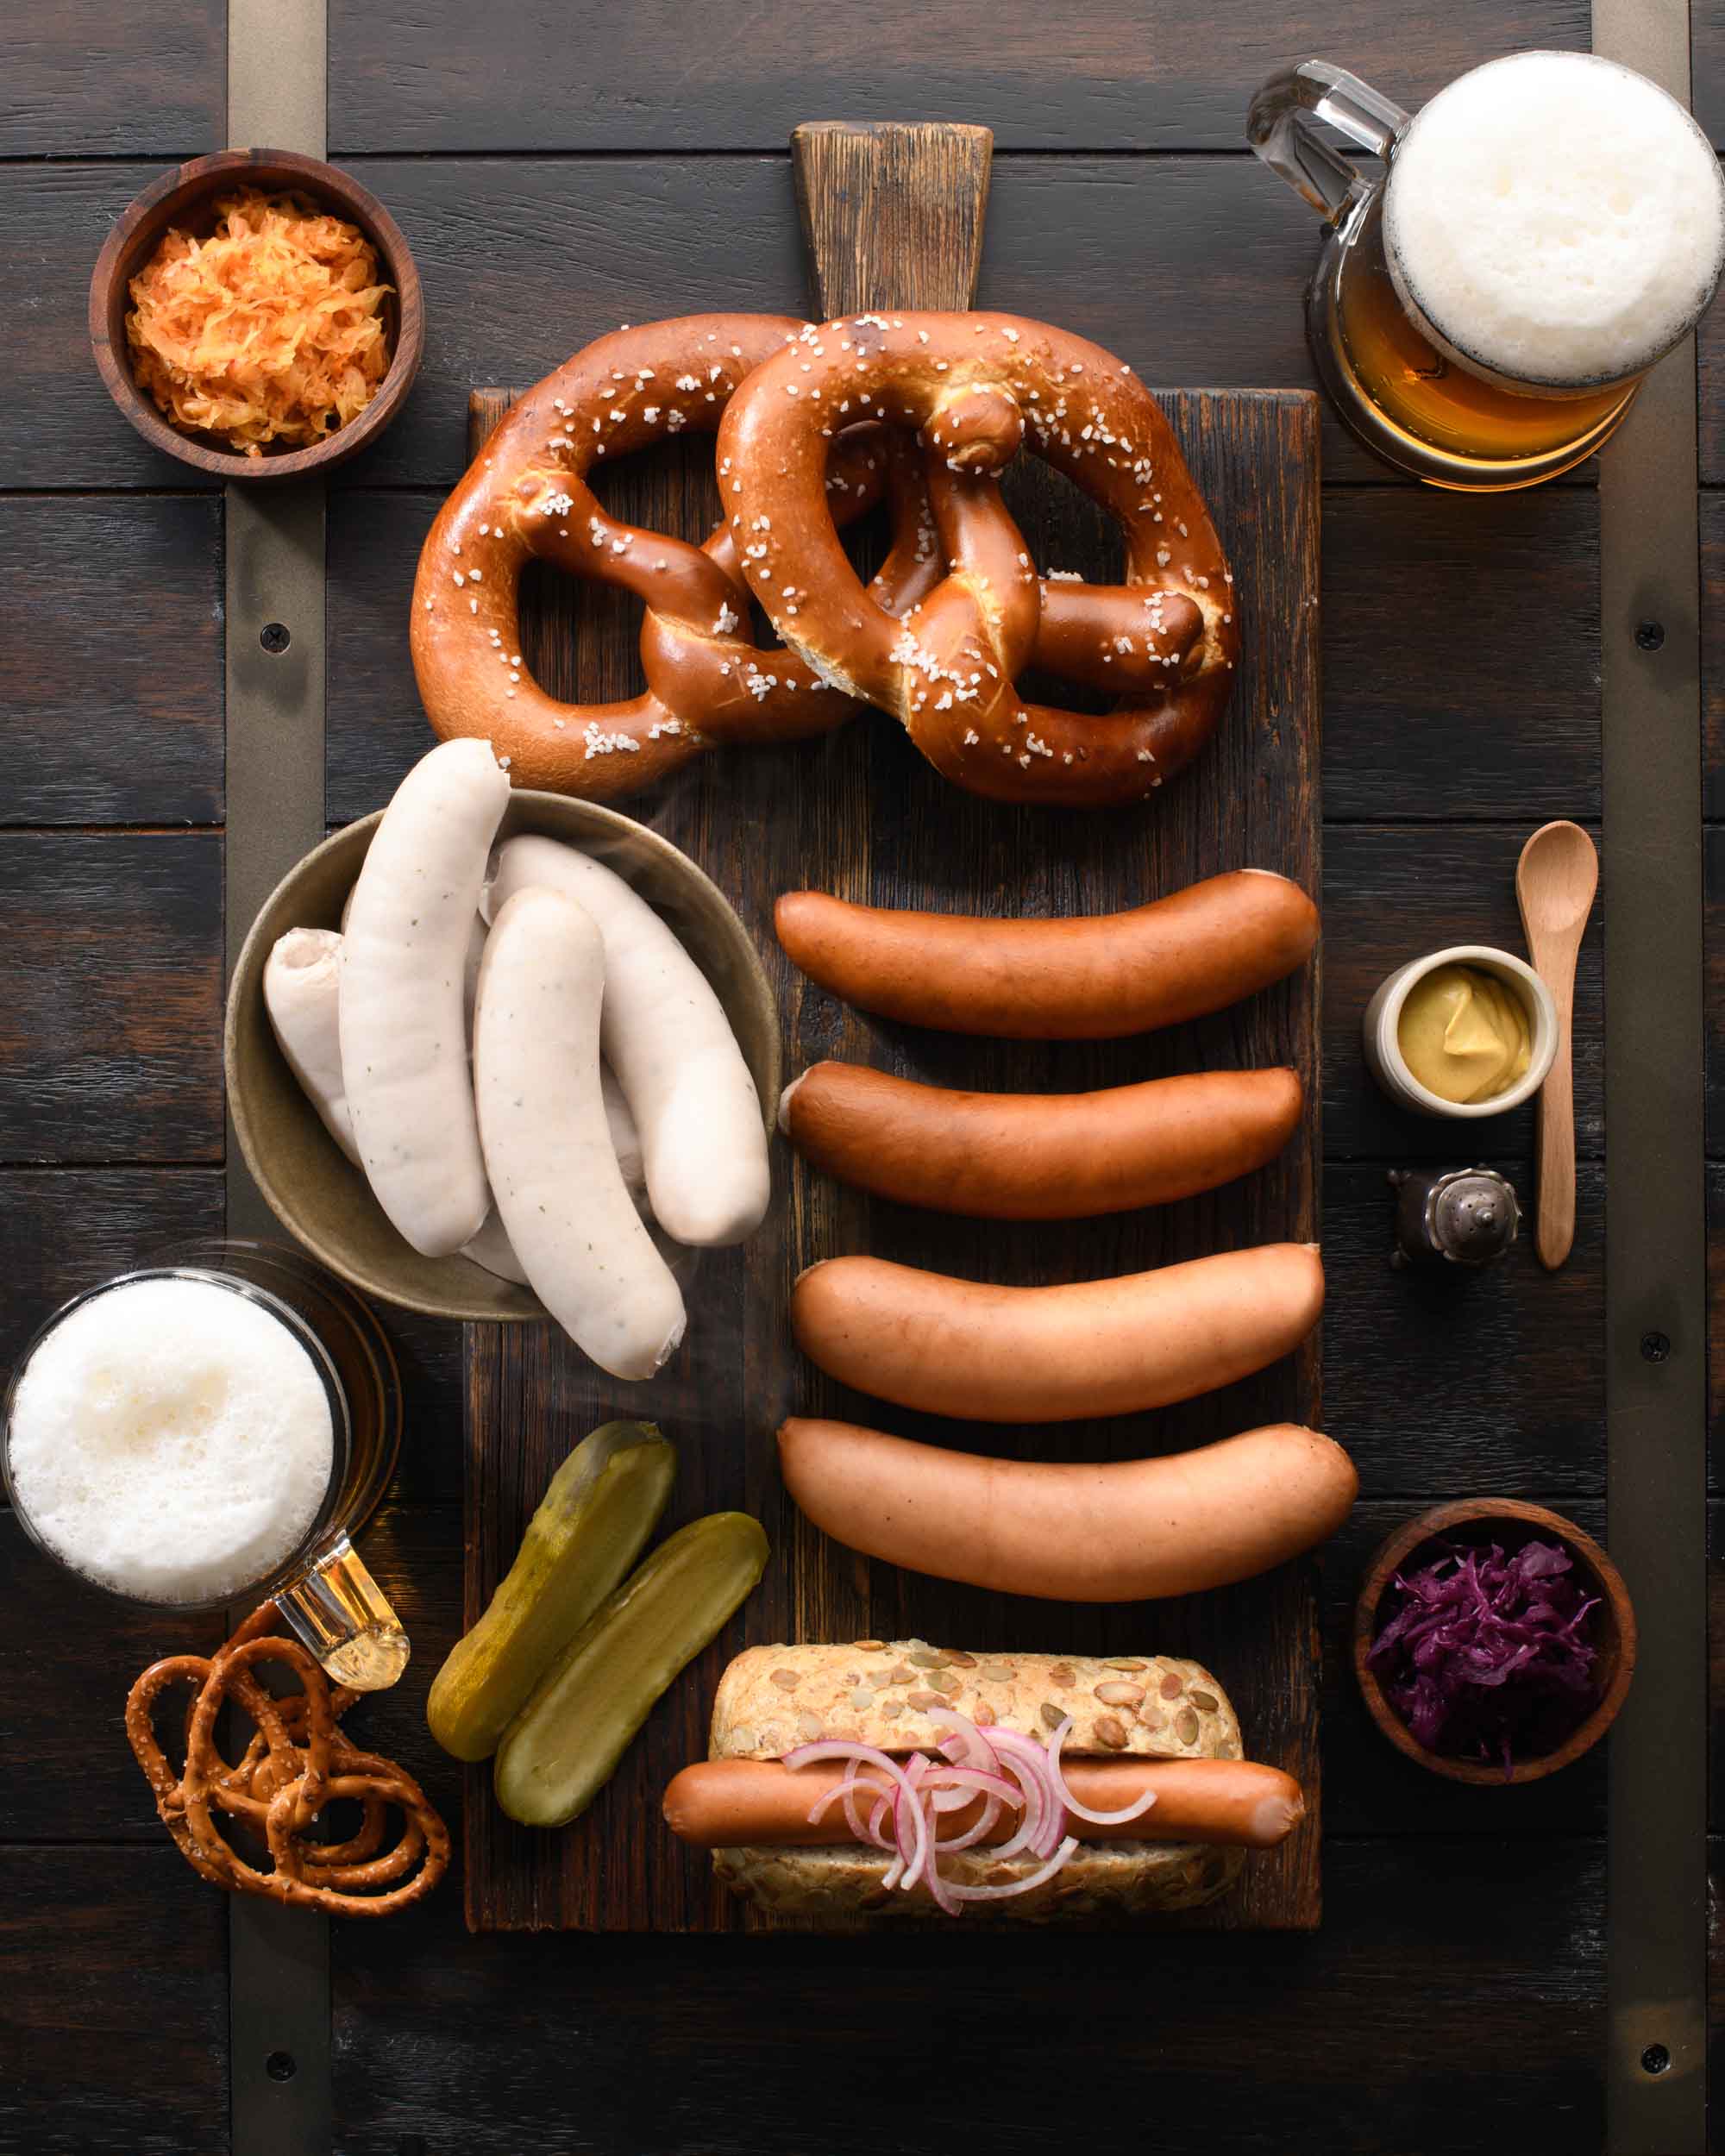 Gotzinger Smallgoods German Sausages on platter with pretzel and beer